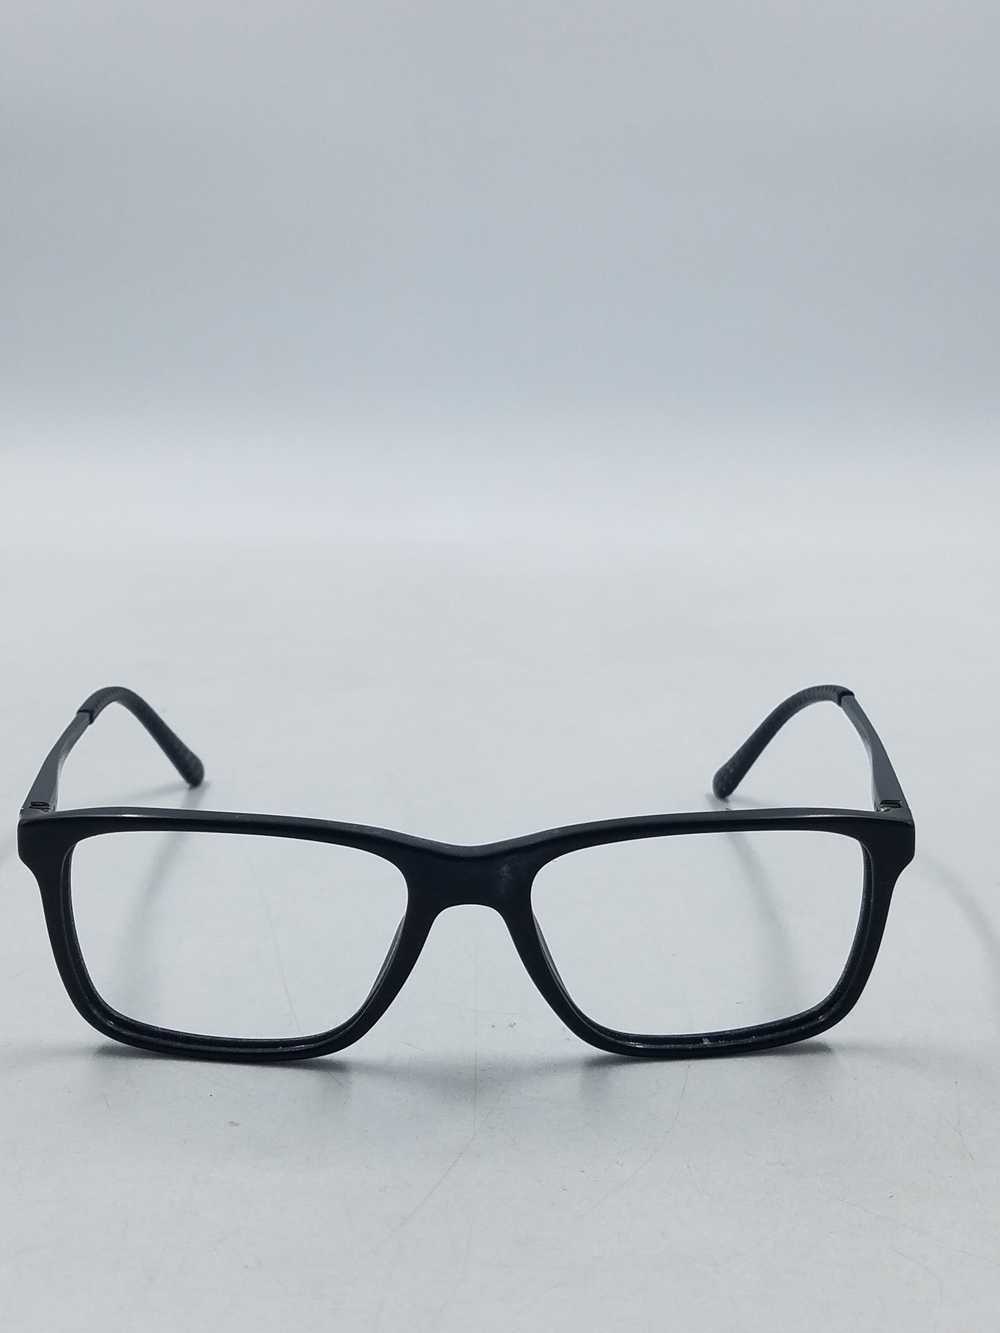 Ralph Lauren Black Square Eyeglasses - image 2